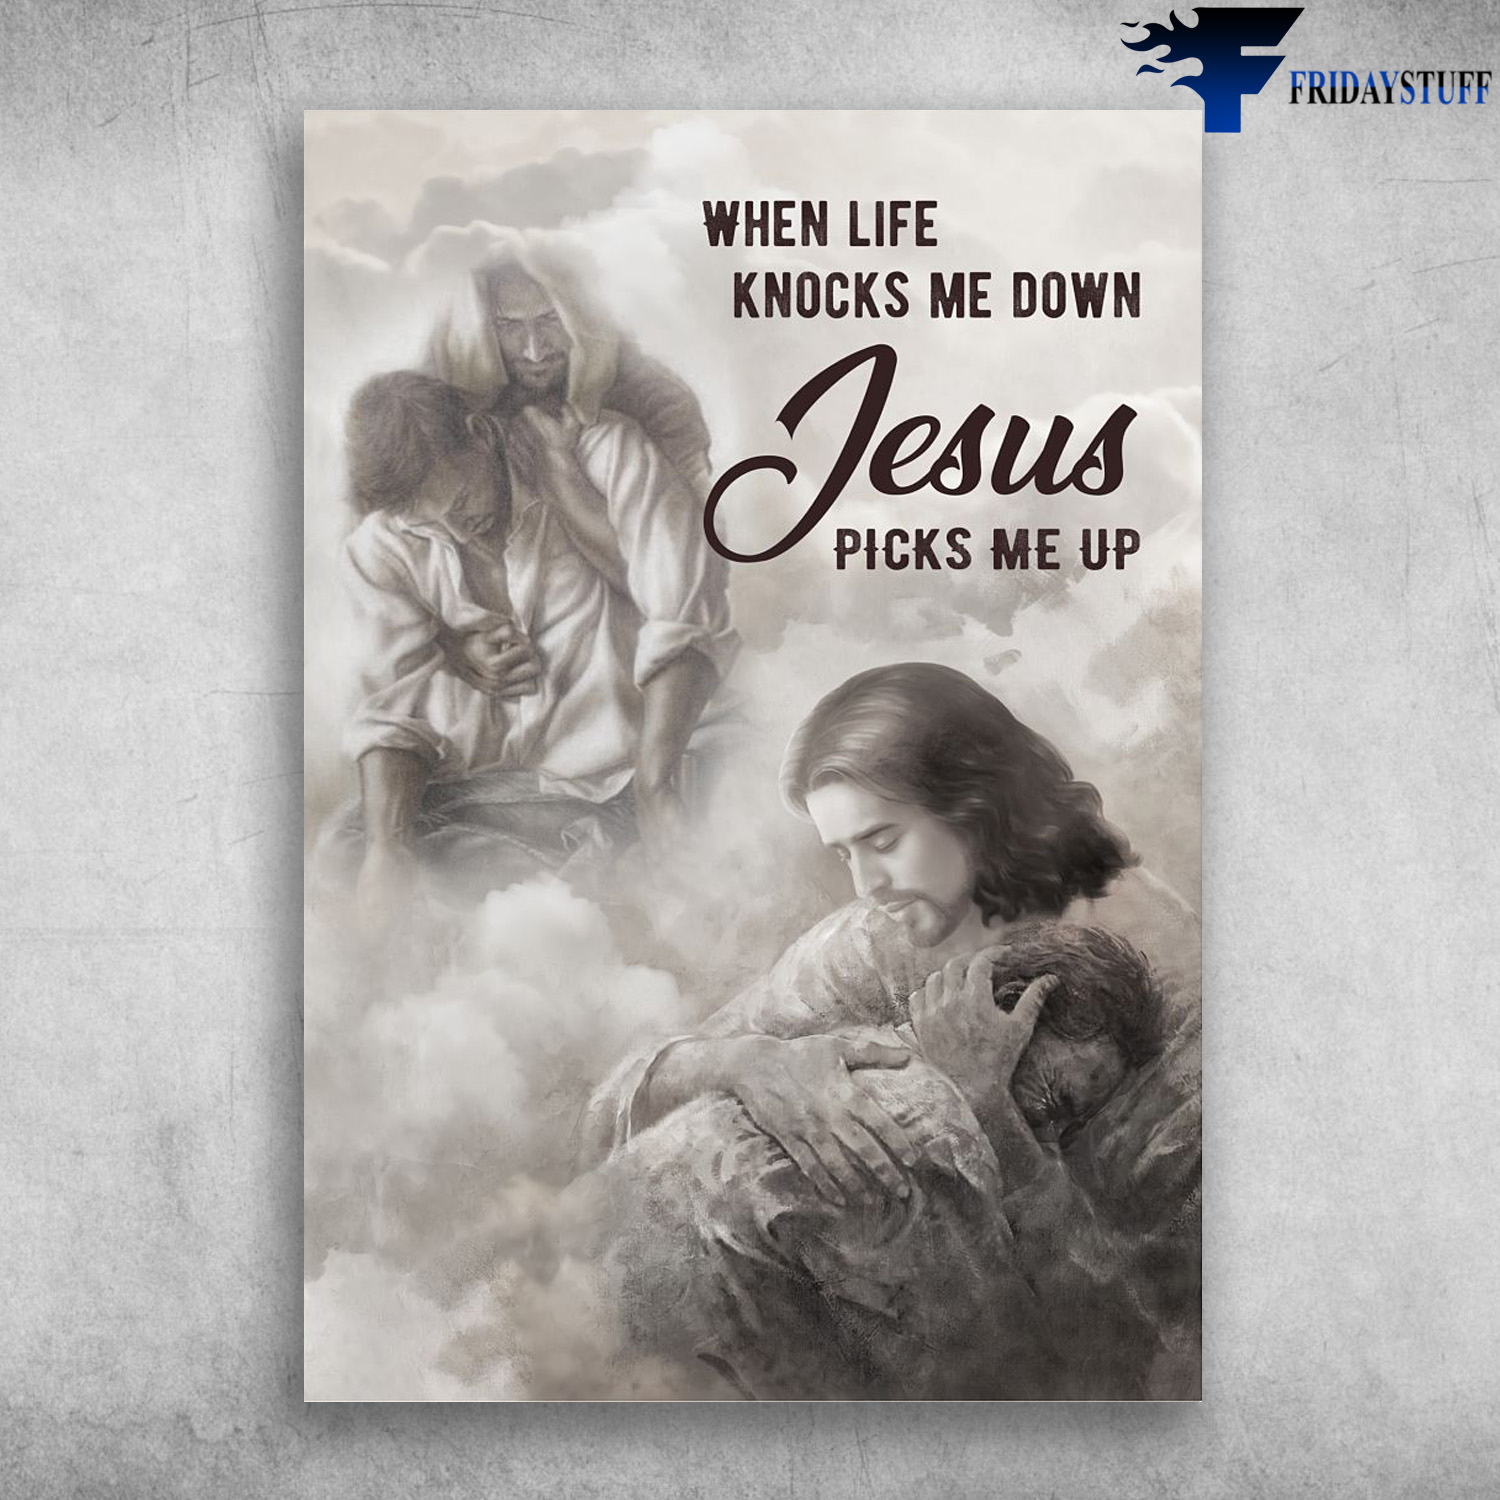 Jesus And Me - When Life Knocks Me Down, JJesus Picks Me Up